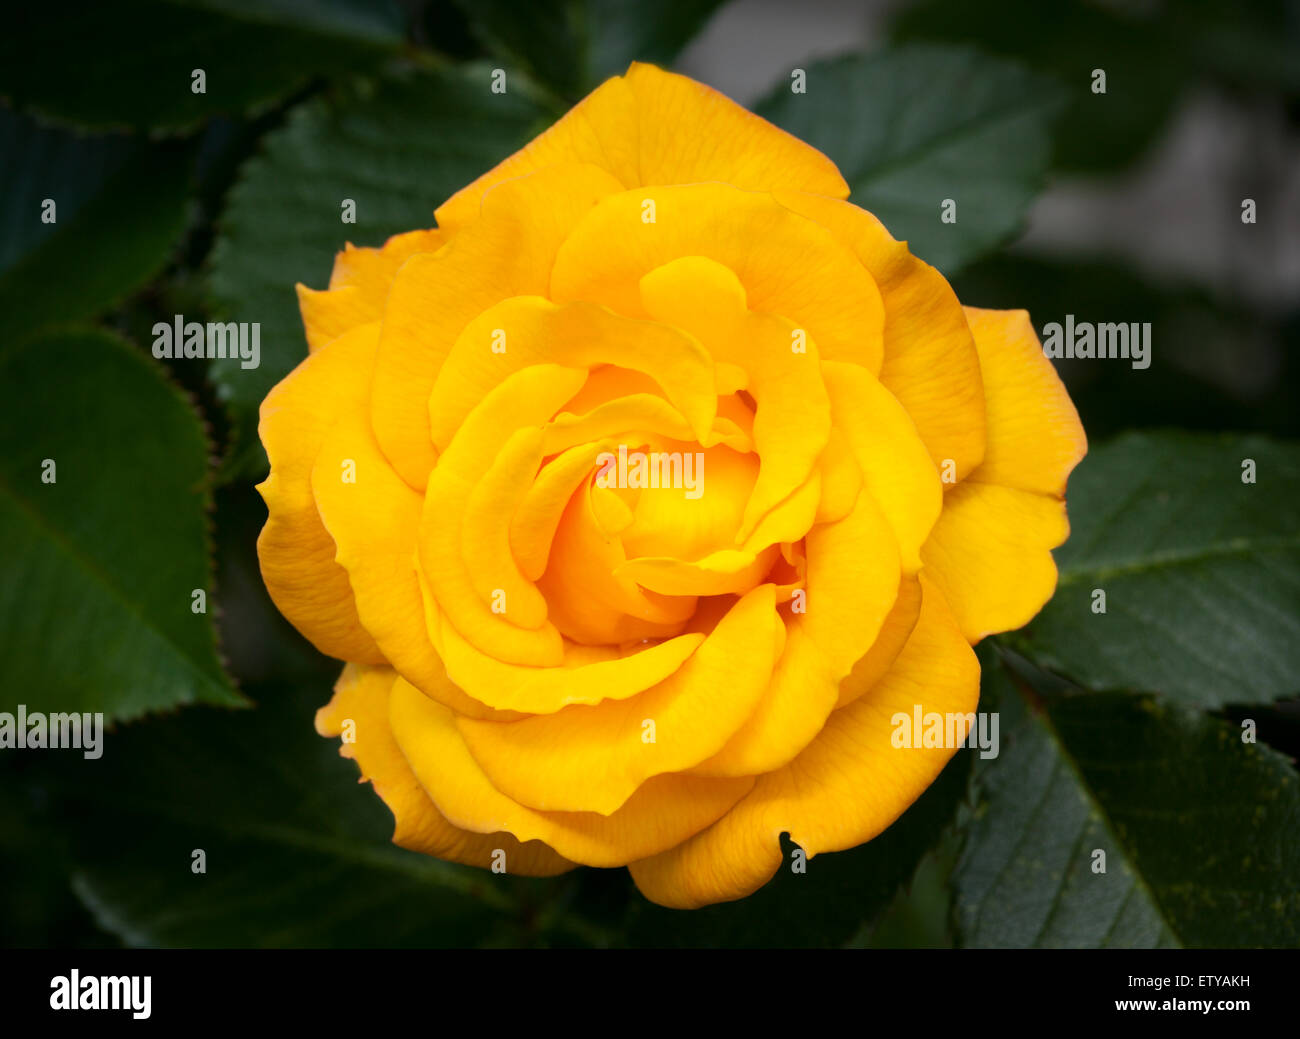 yellow rose on its bush Stock Photo